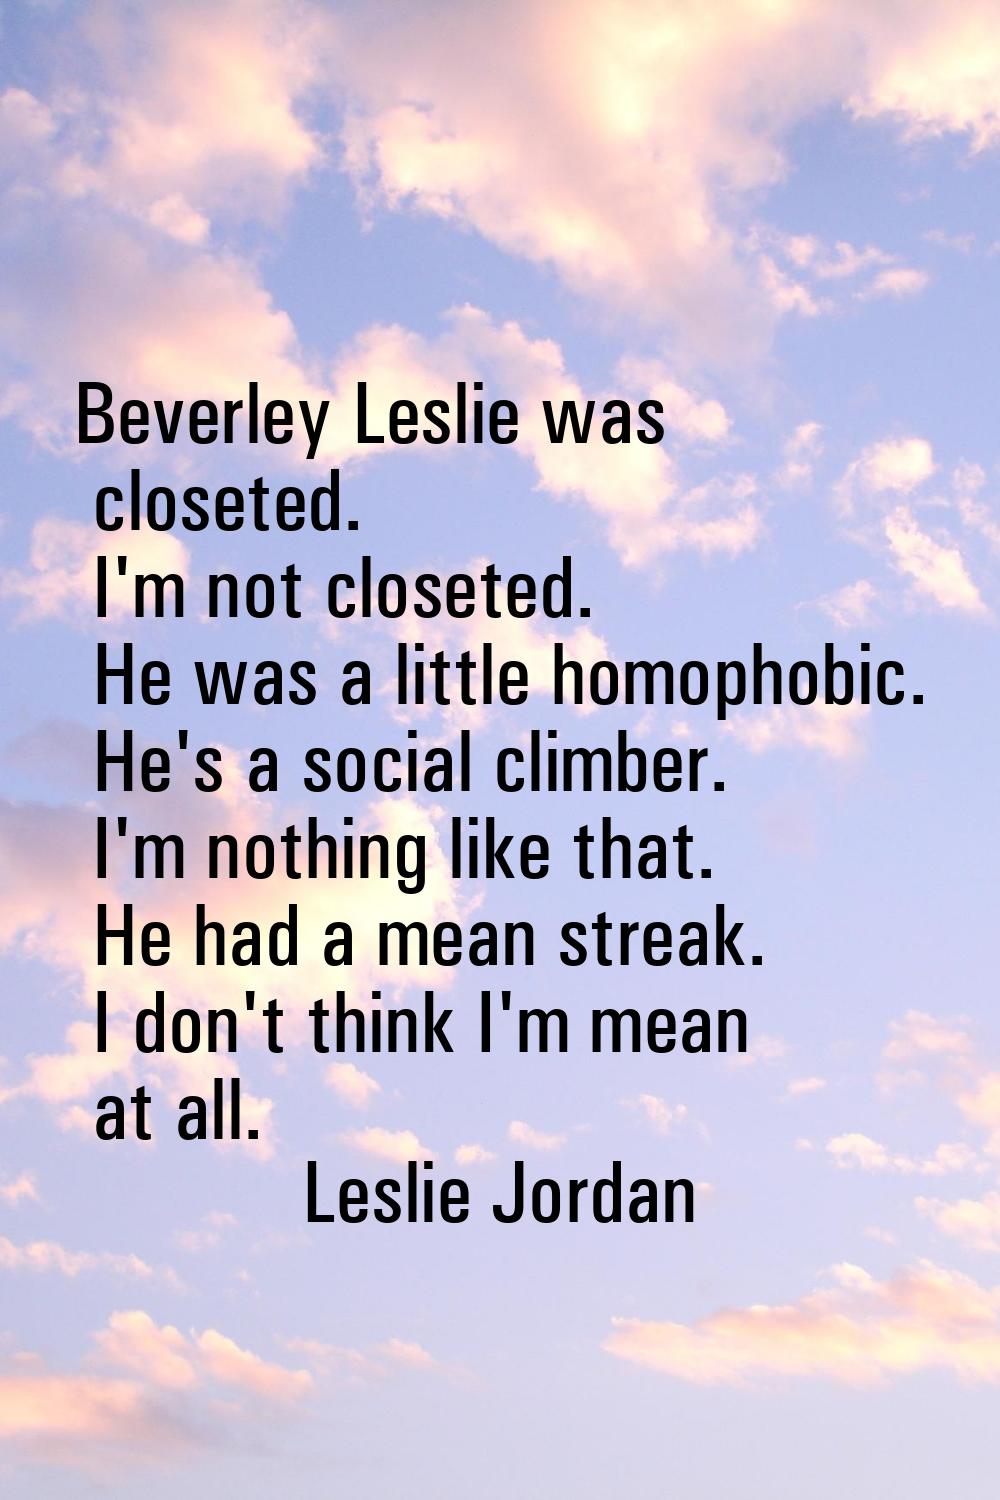 Beverley Leslie was closeted. I'm not closeted. He was a little homophobic. He's a social climber. 